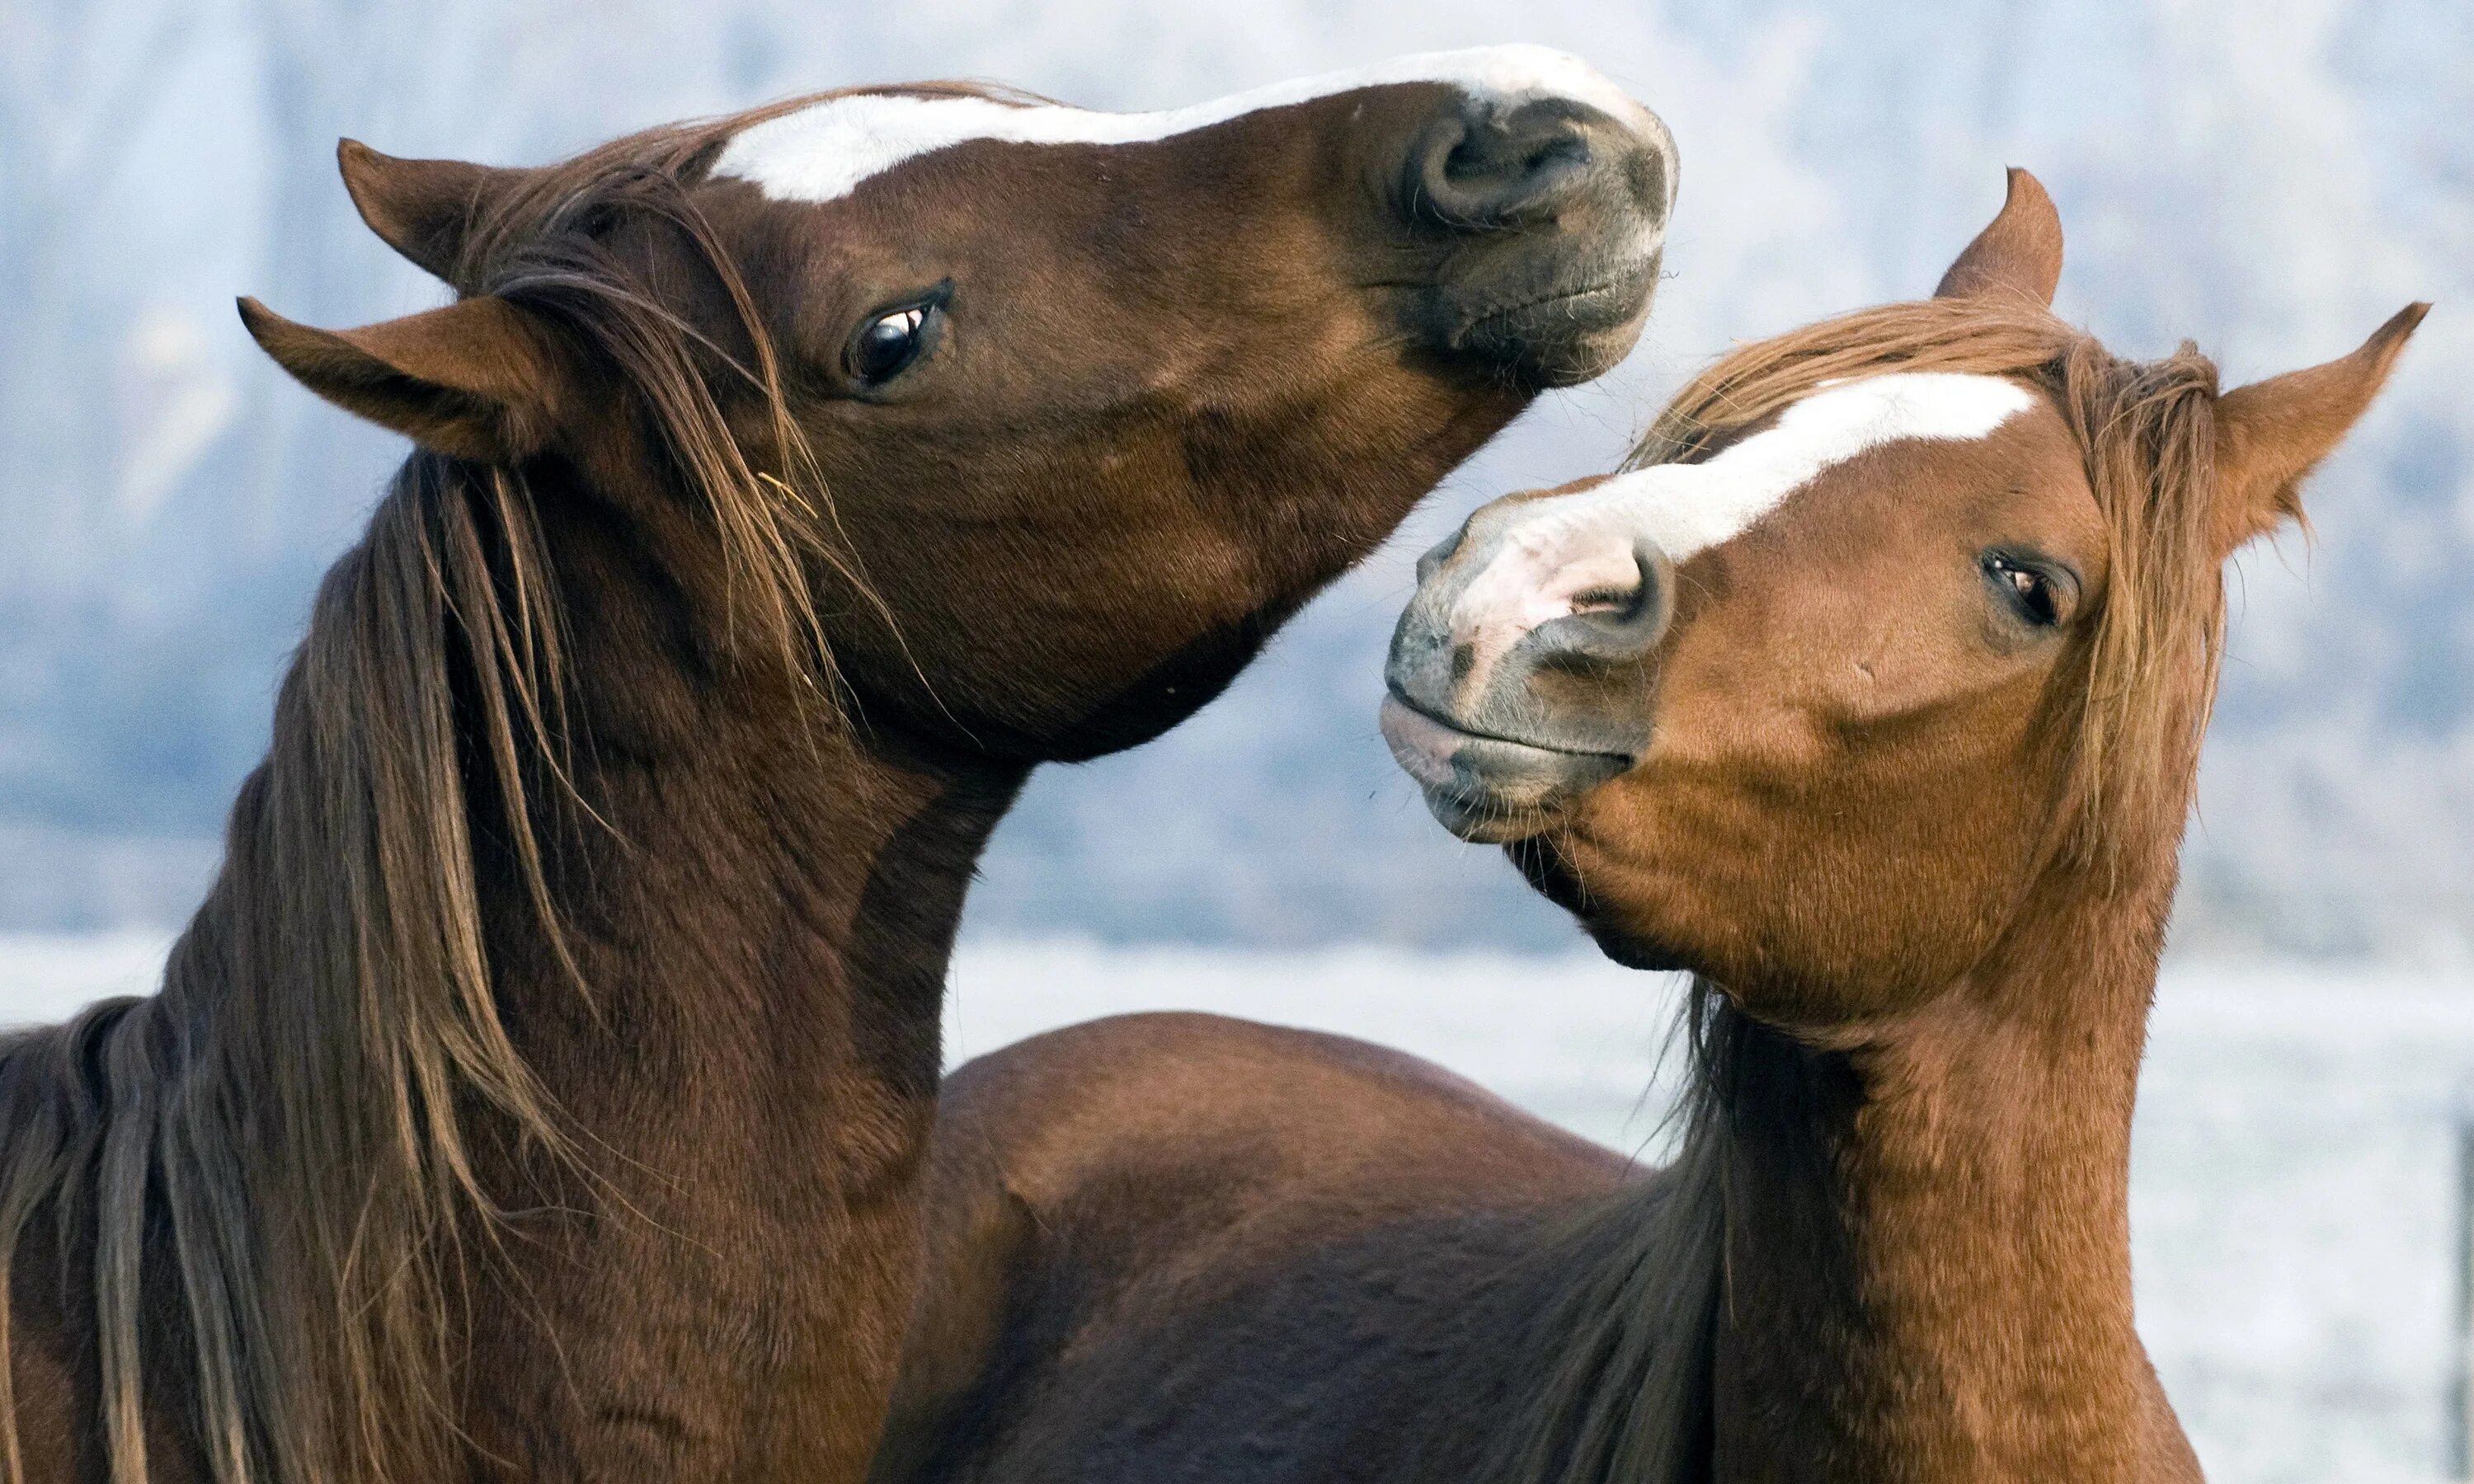 Two horse. Лошадь. Пара лошадей. Две лошади. Лошади любовь.